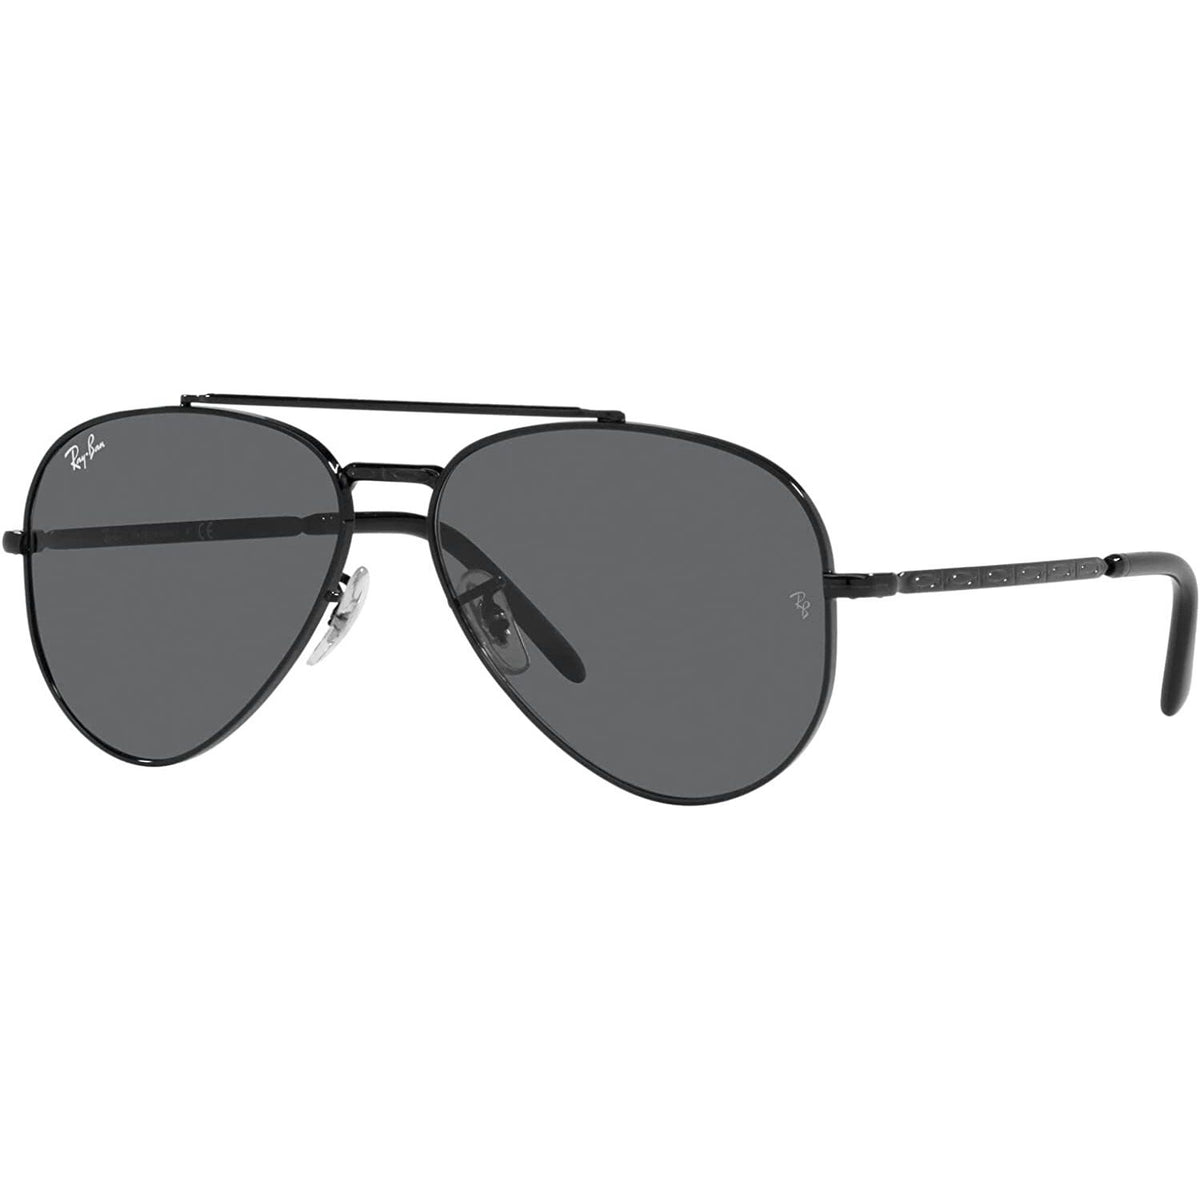 Ray-Ban RB3625 New Aviator Sunglasses